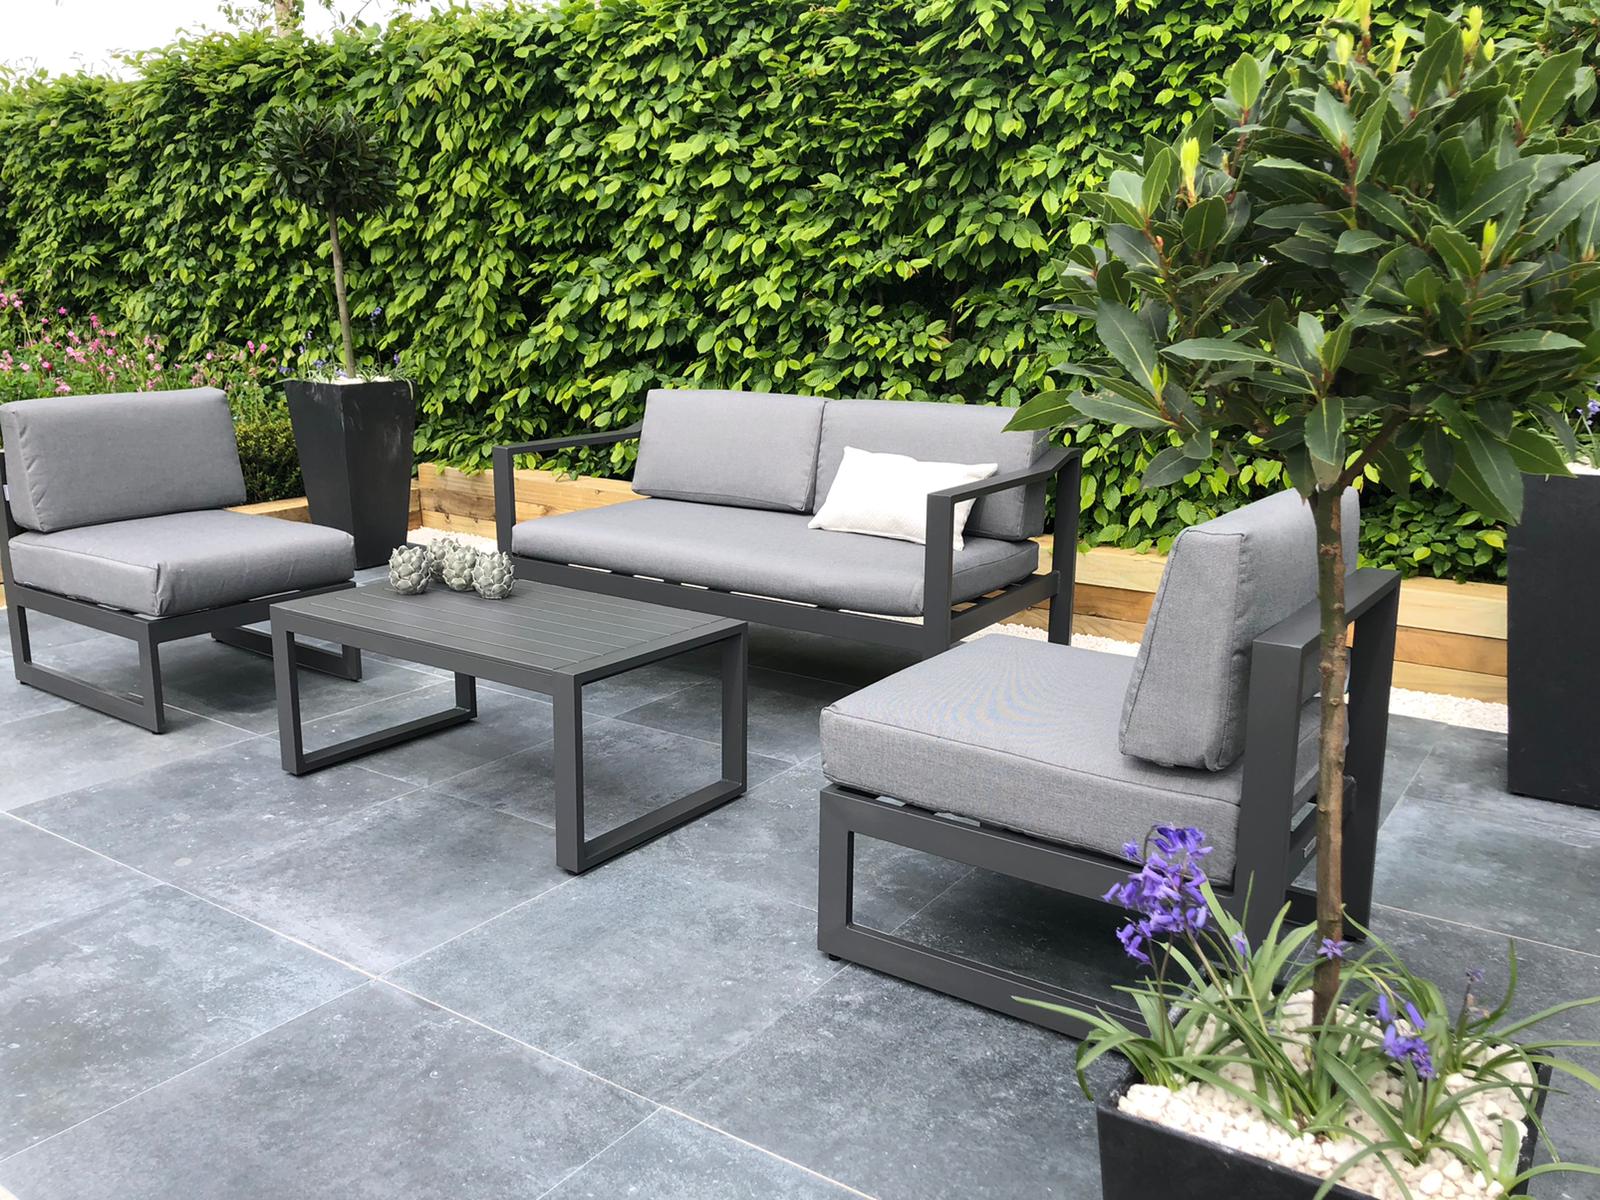 A four seater outdoor furniture lounge set in a contemporary garden design.